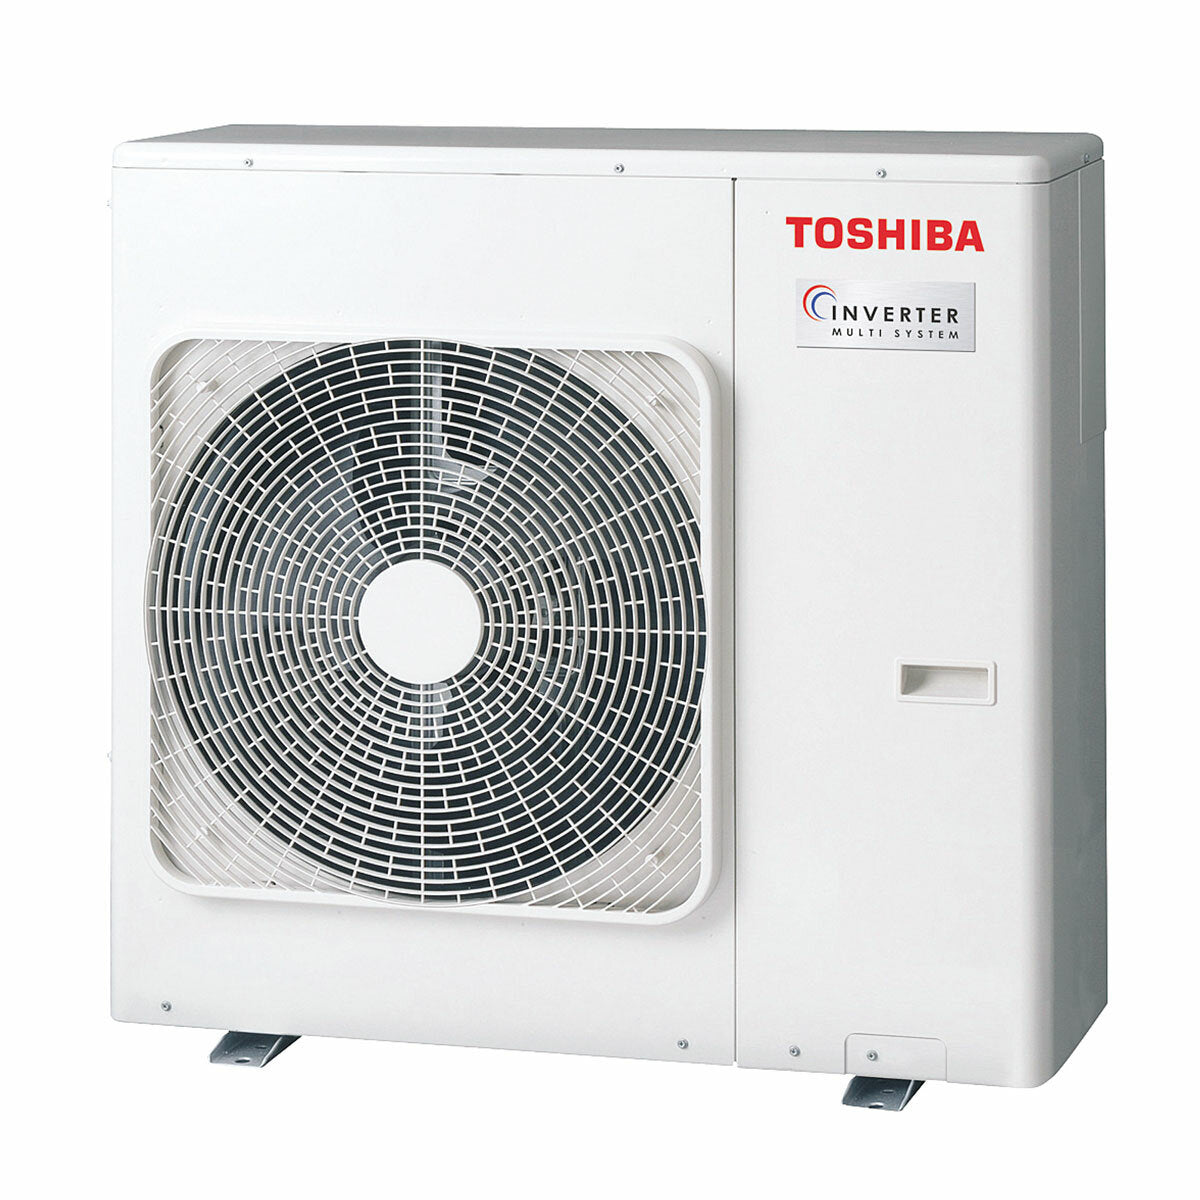 Toshiba New Seiya air conditioner split panels 7000+7000+7000+7000 BTU inverter A++ external unit 8 kW